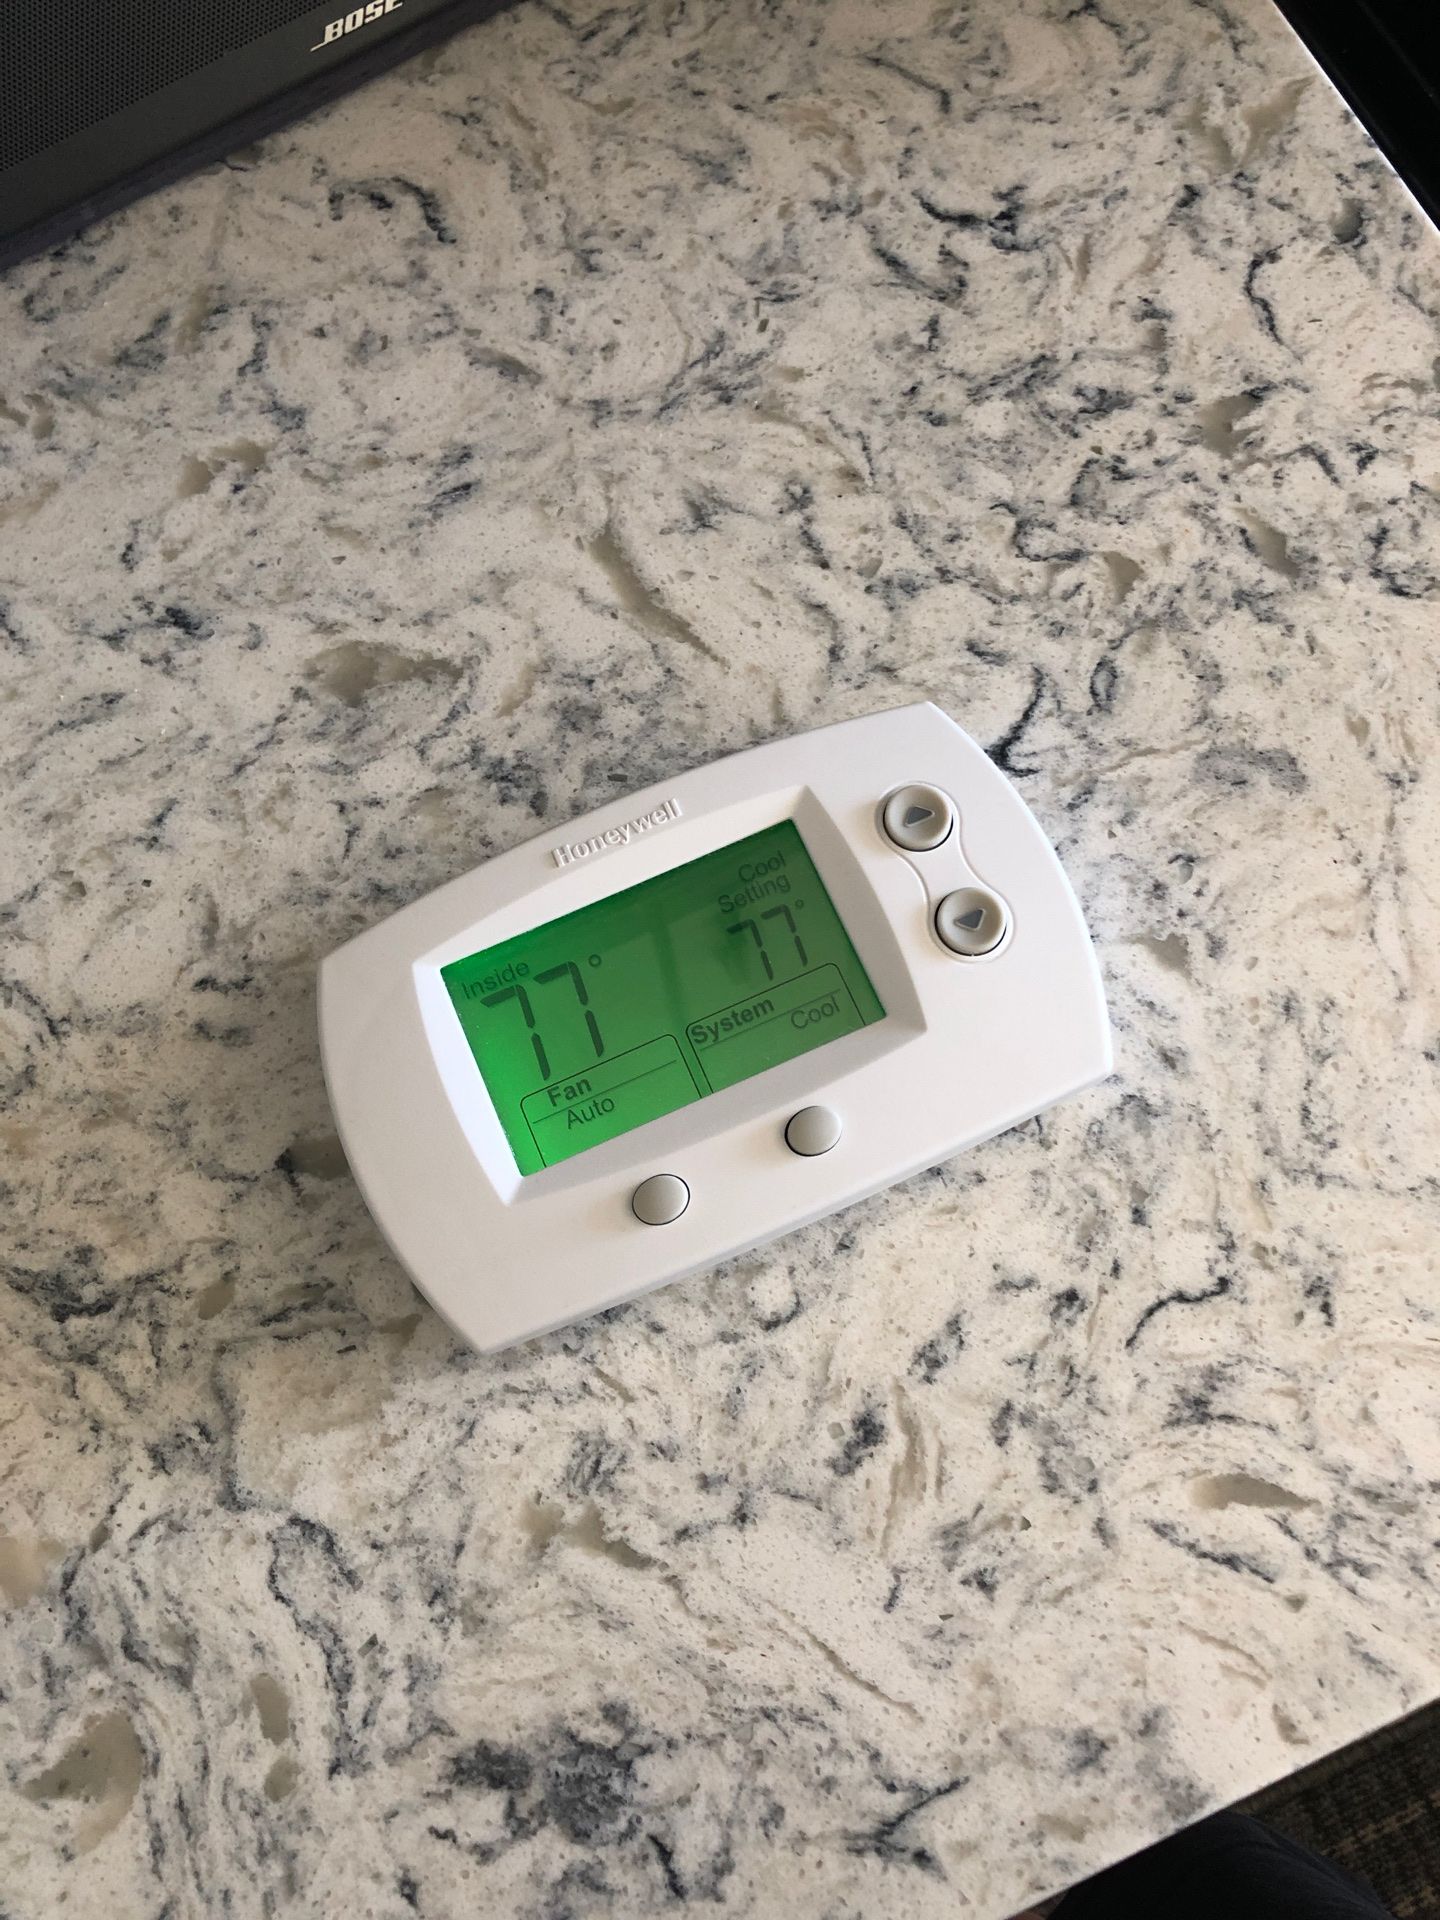 Honeywell Digital Thermostat